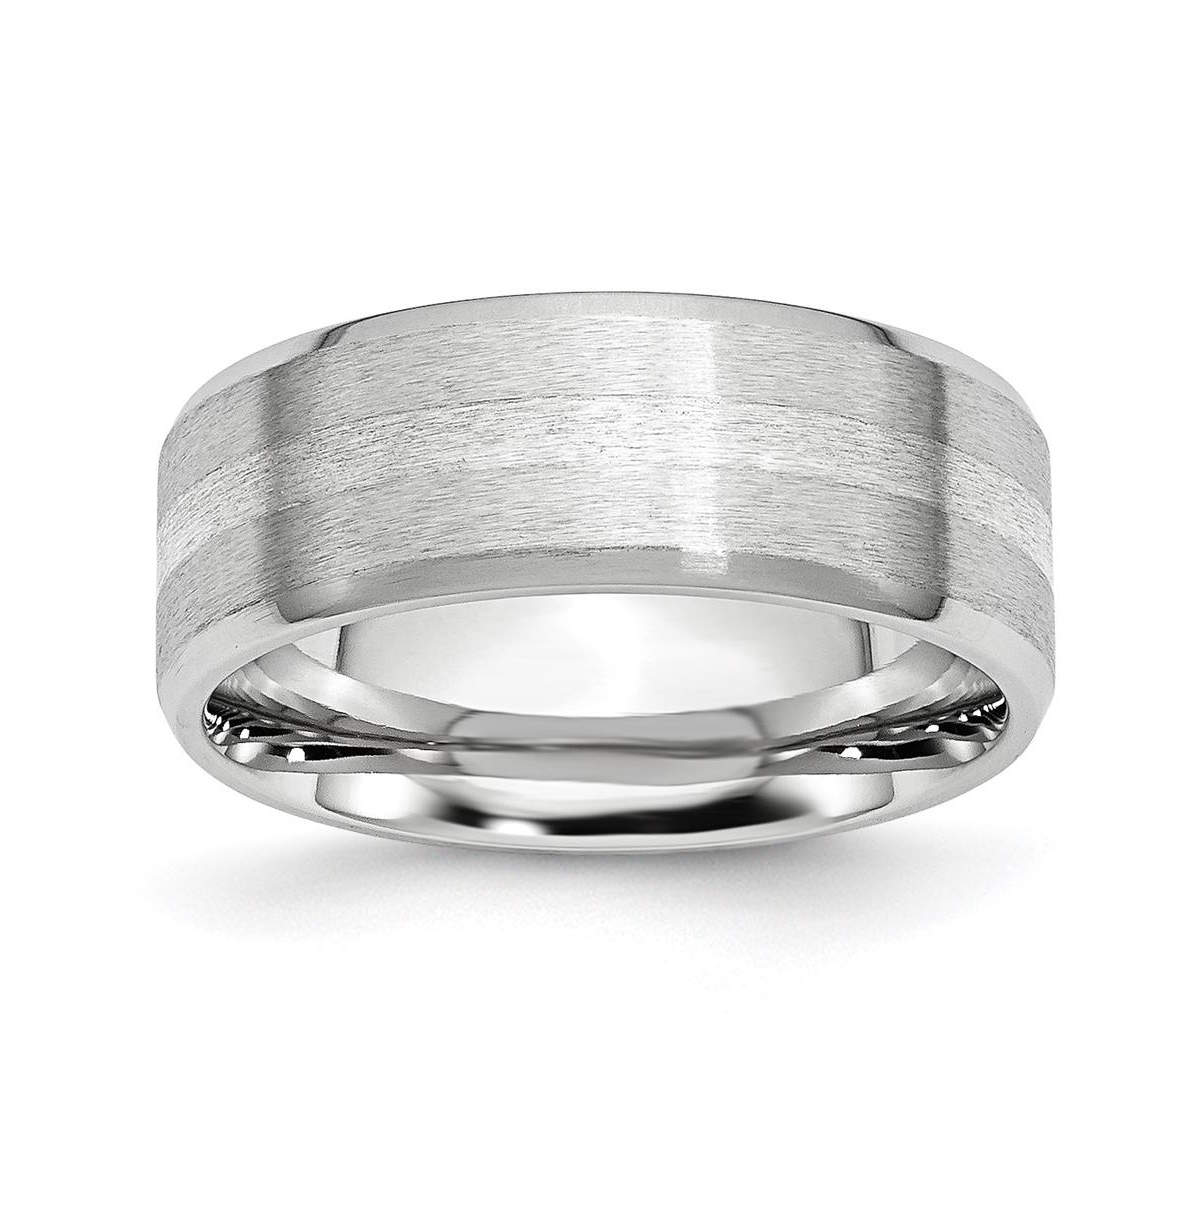 Cobalt Sterling Silver Inlay Satin Beveled Edge Band Ring